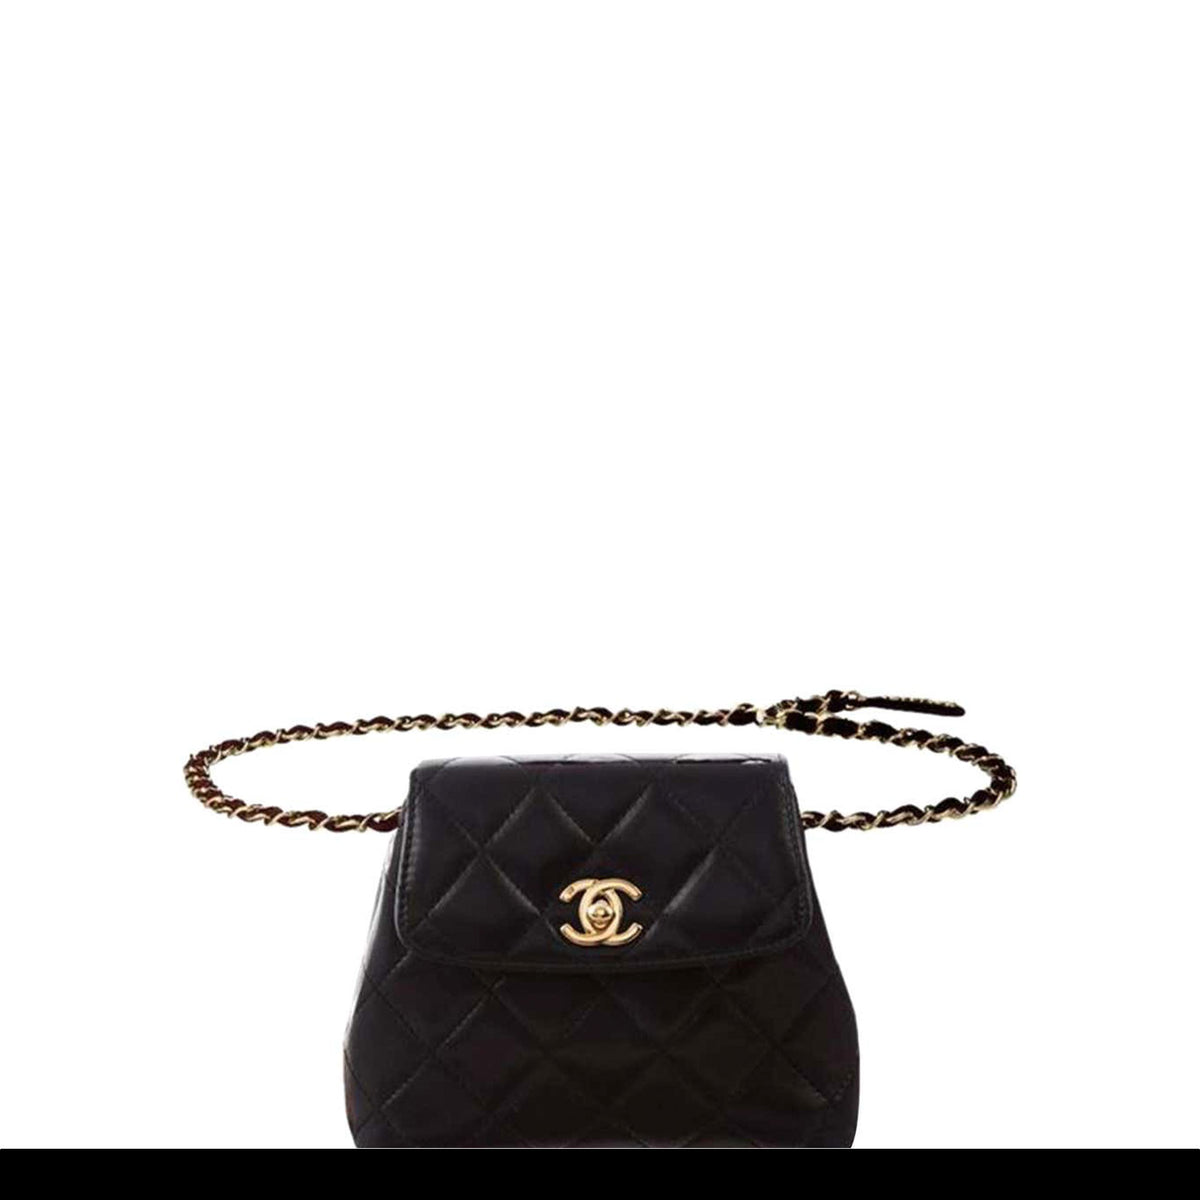 Chanel Belt Rare Vintage 1995 Caviar Fanny Pack Waist Bum Black Leather Bag